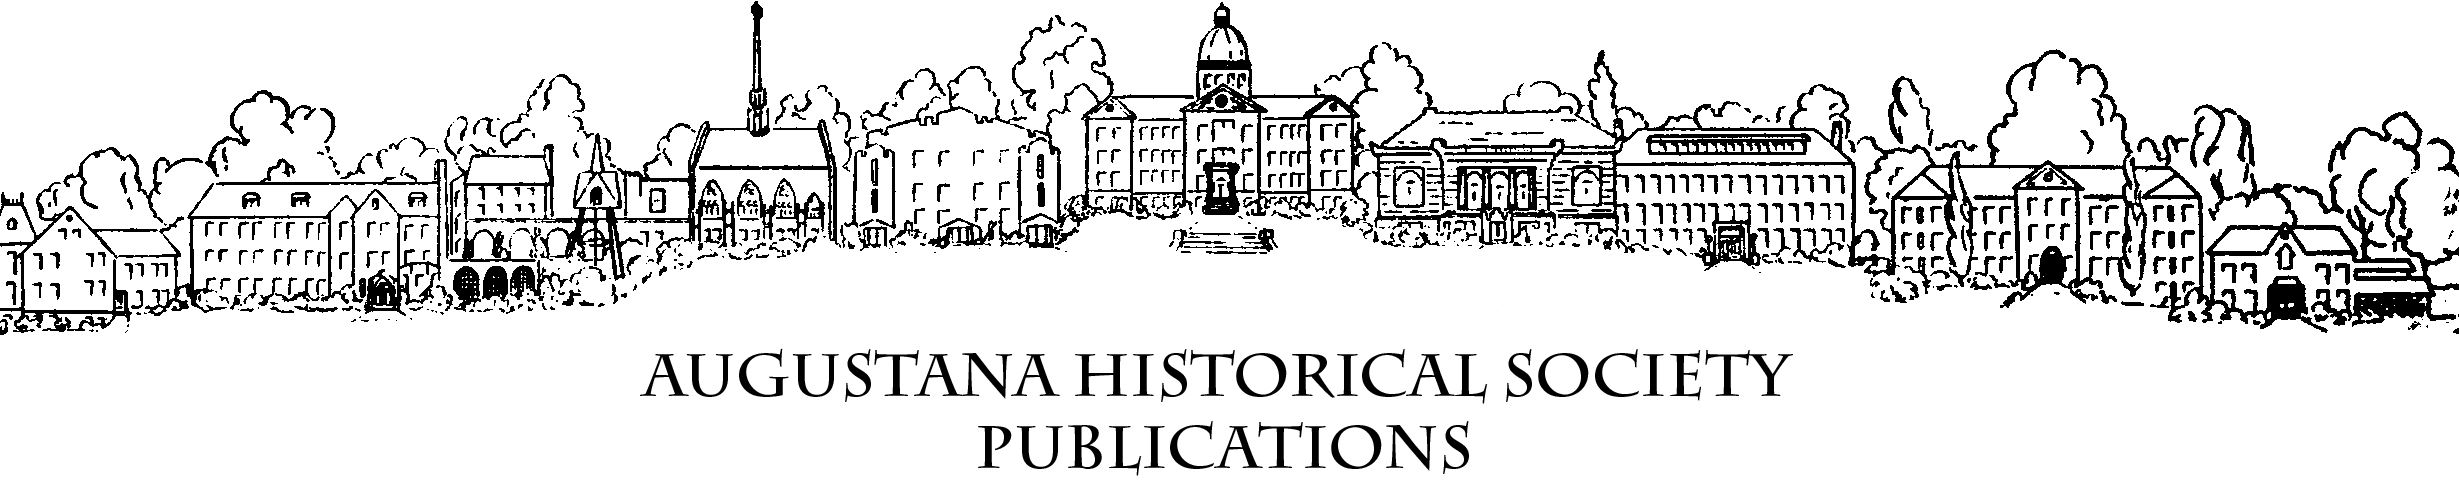 Augustana Historical Society Publications